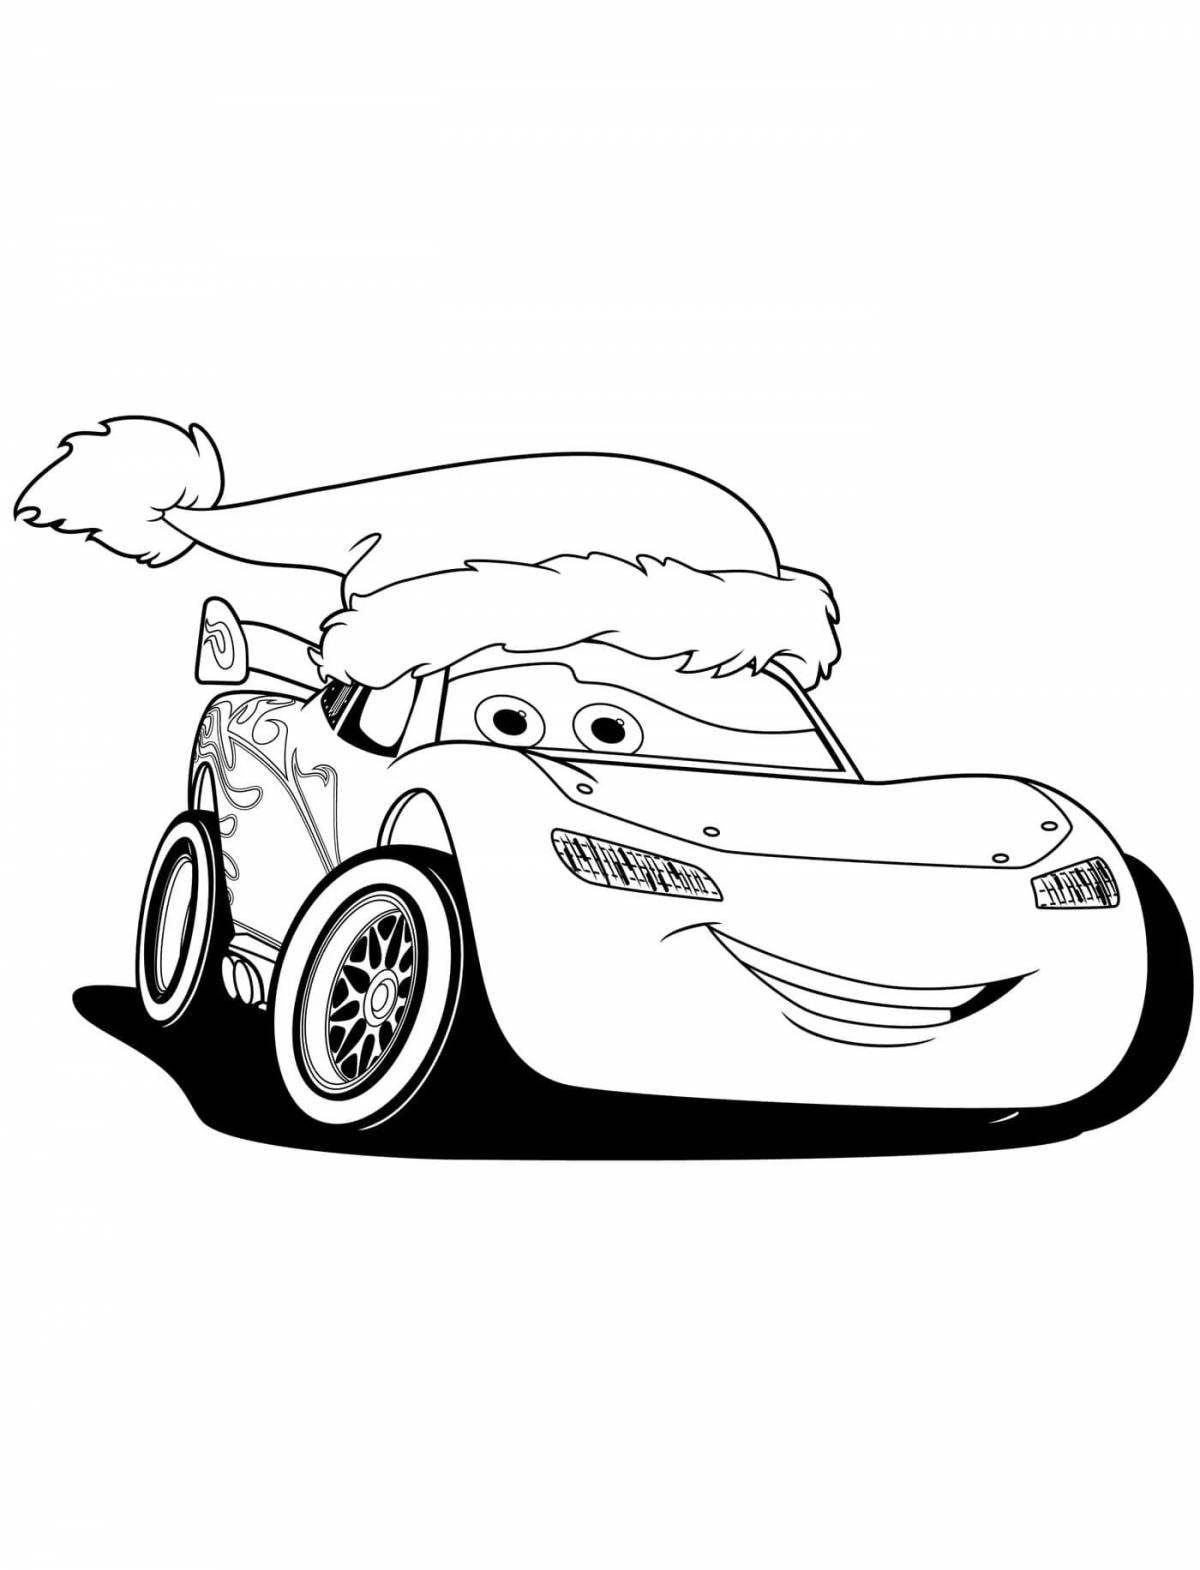 A fascinating Christmas car